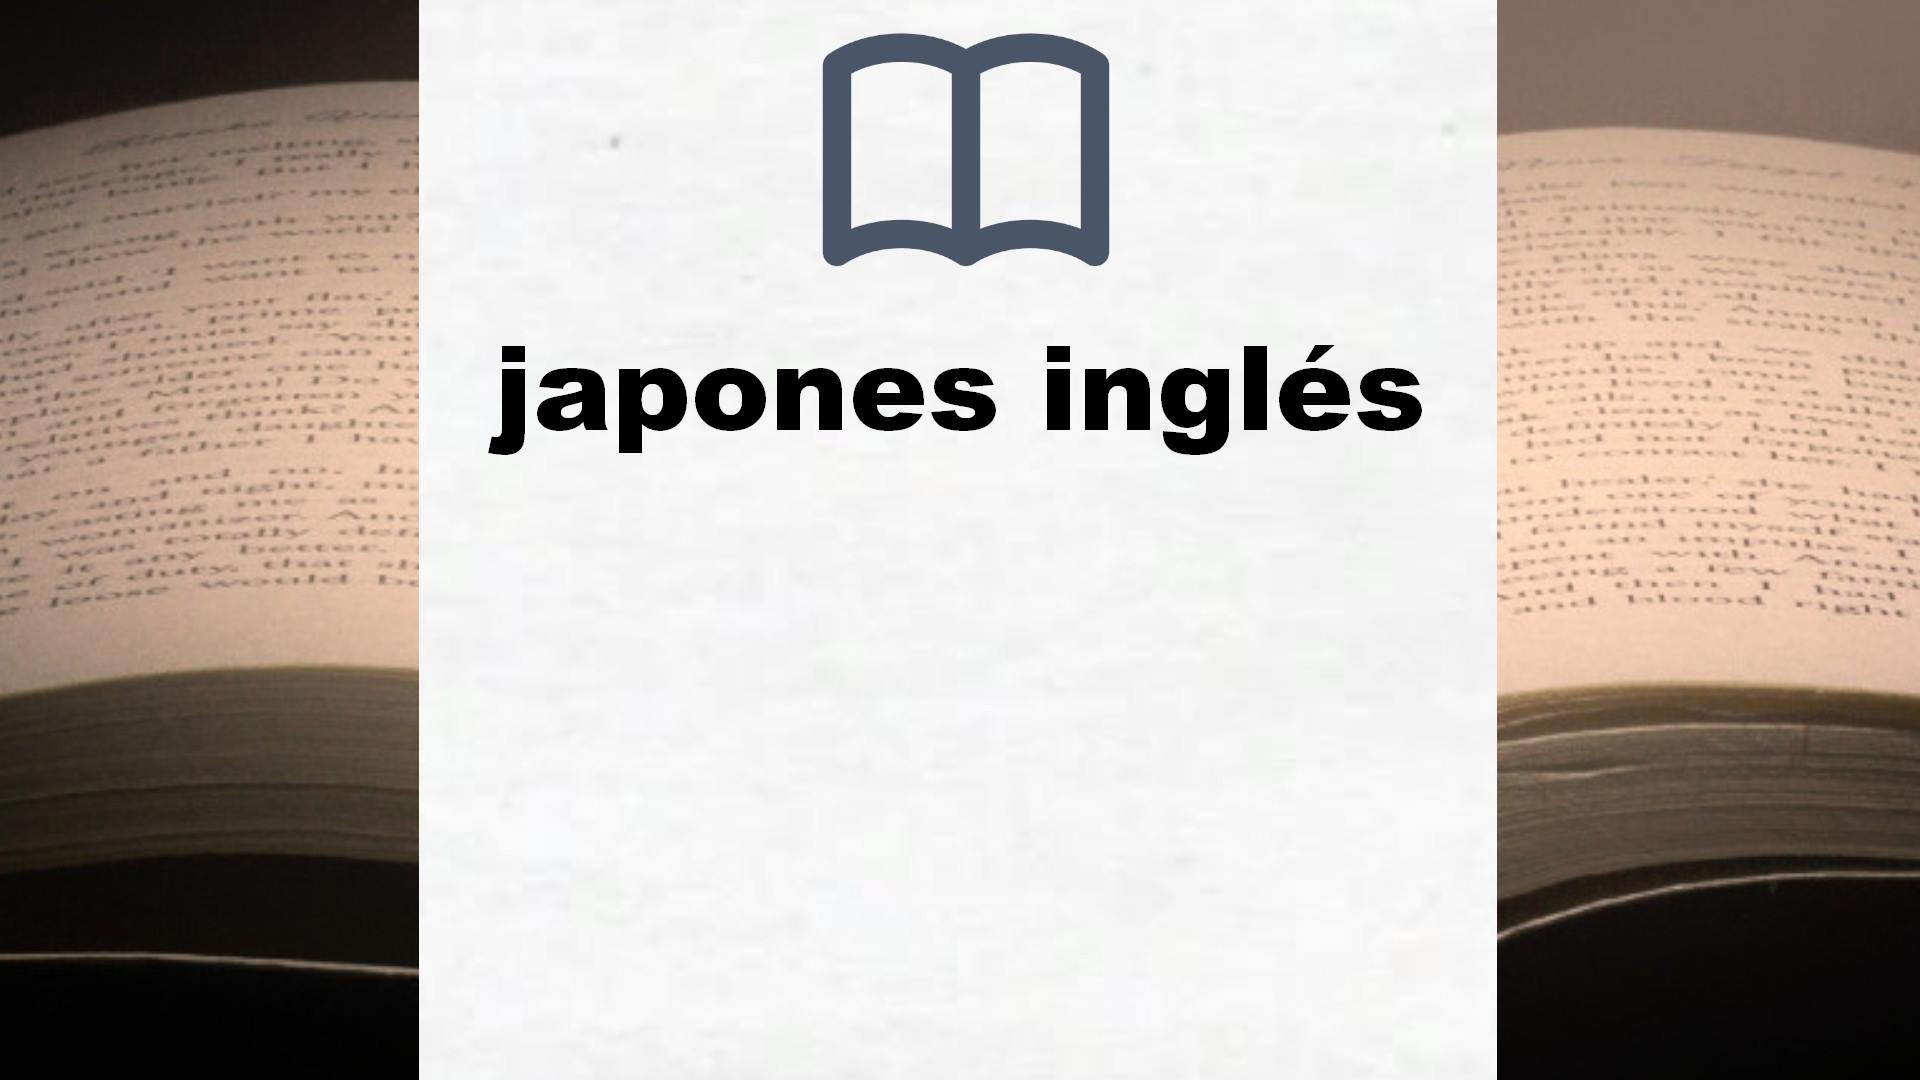 Libros sobre japones inglés